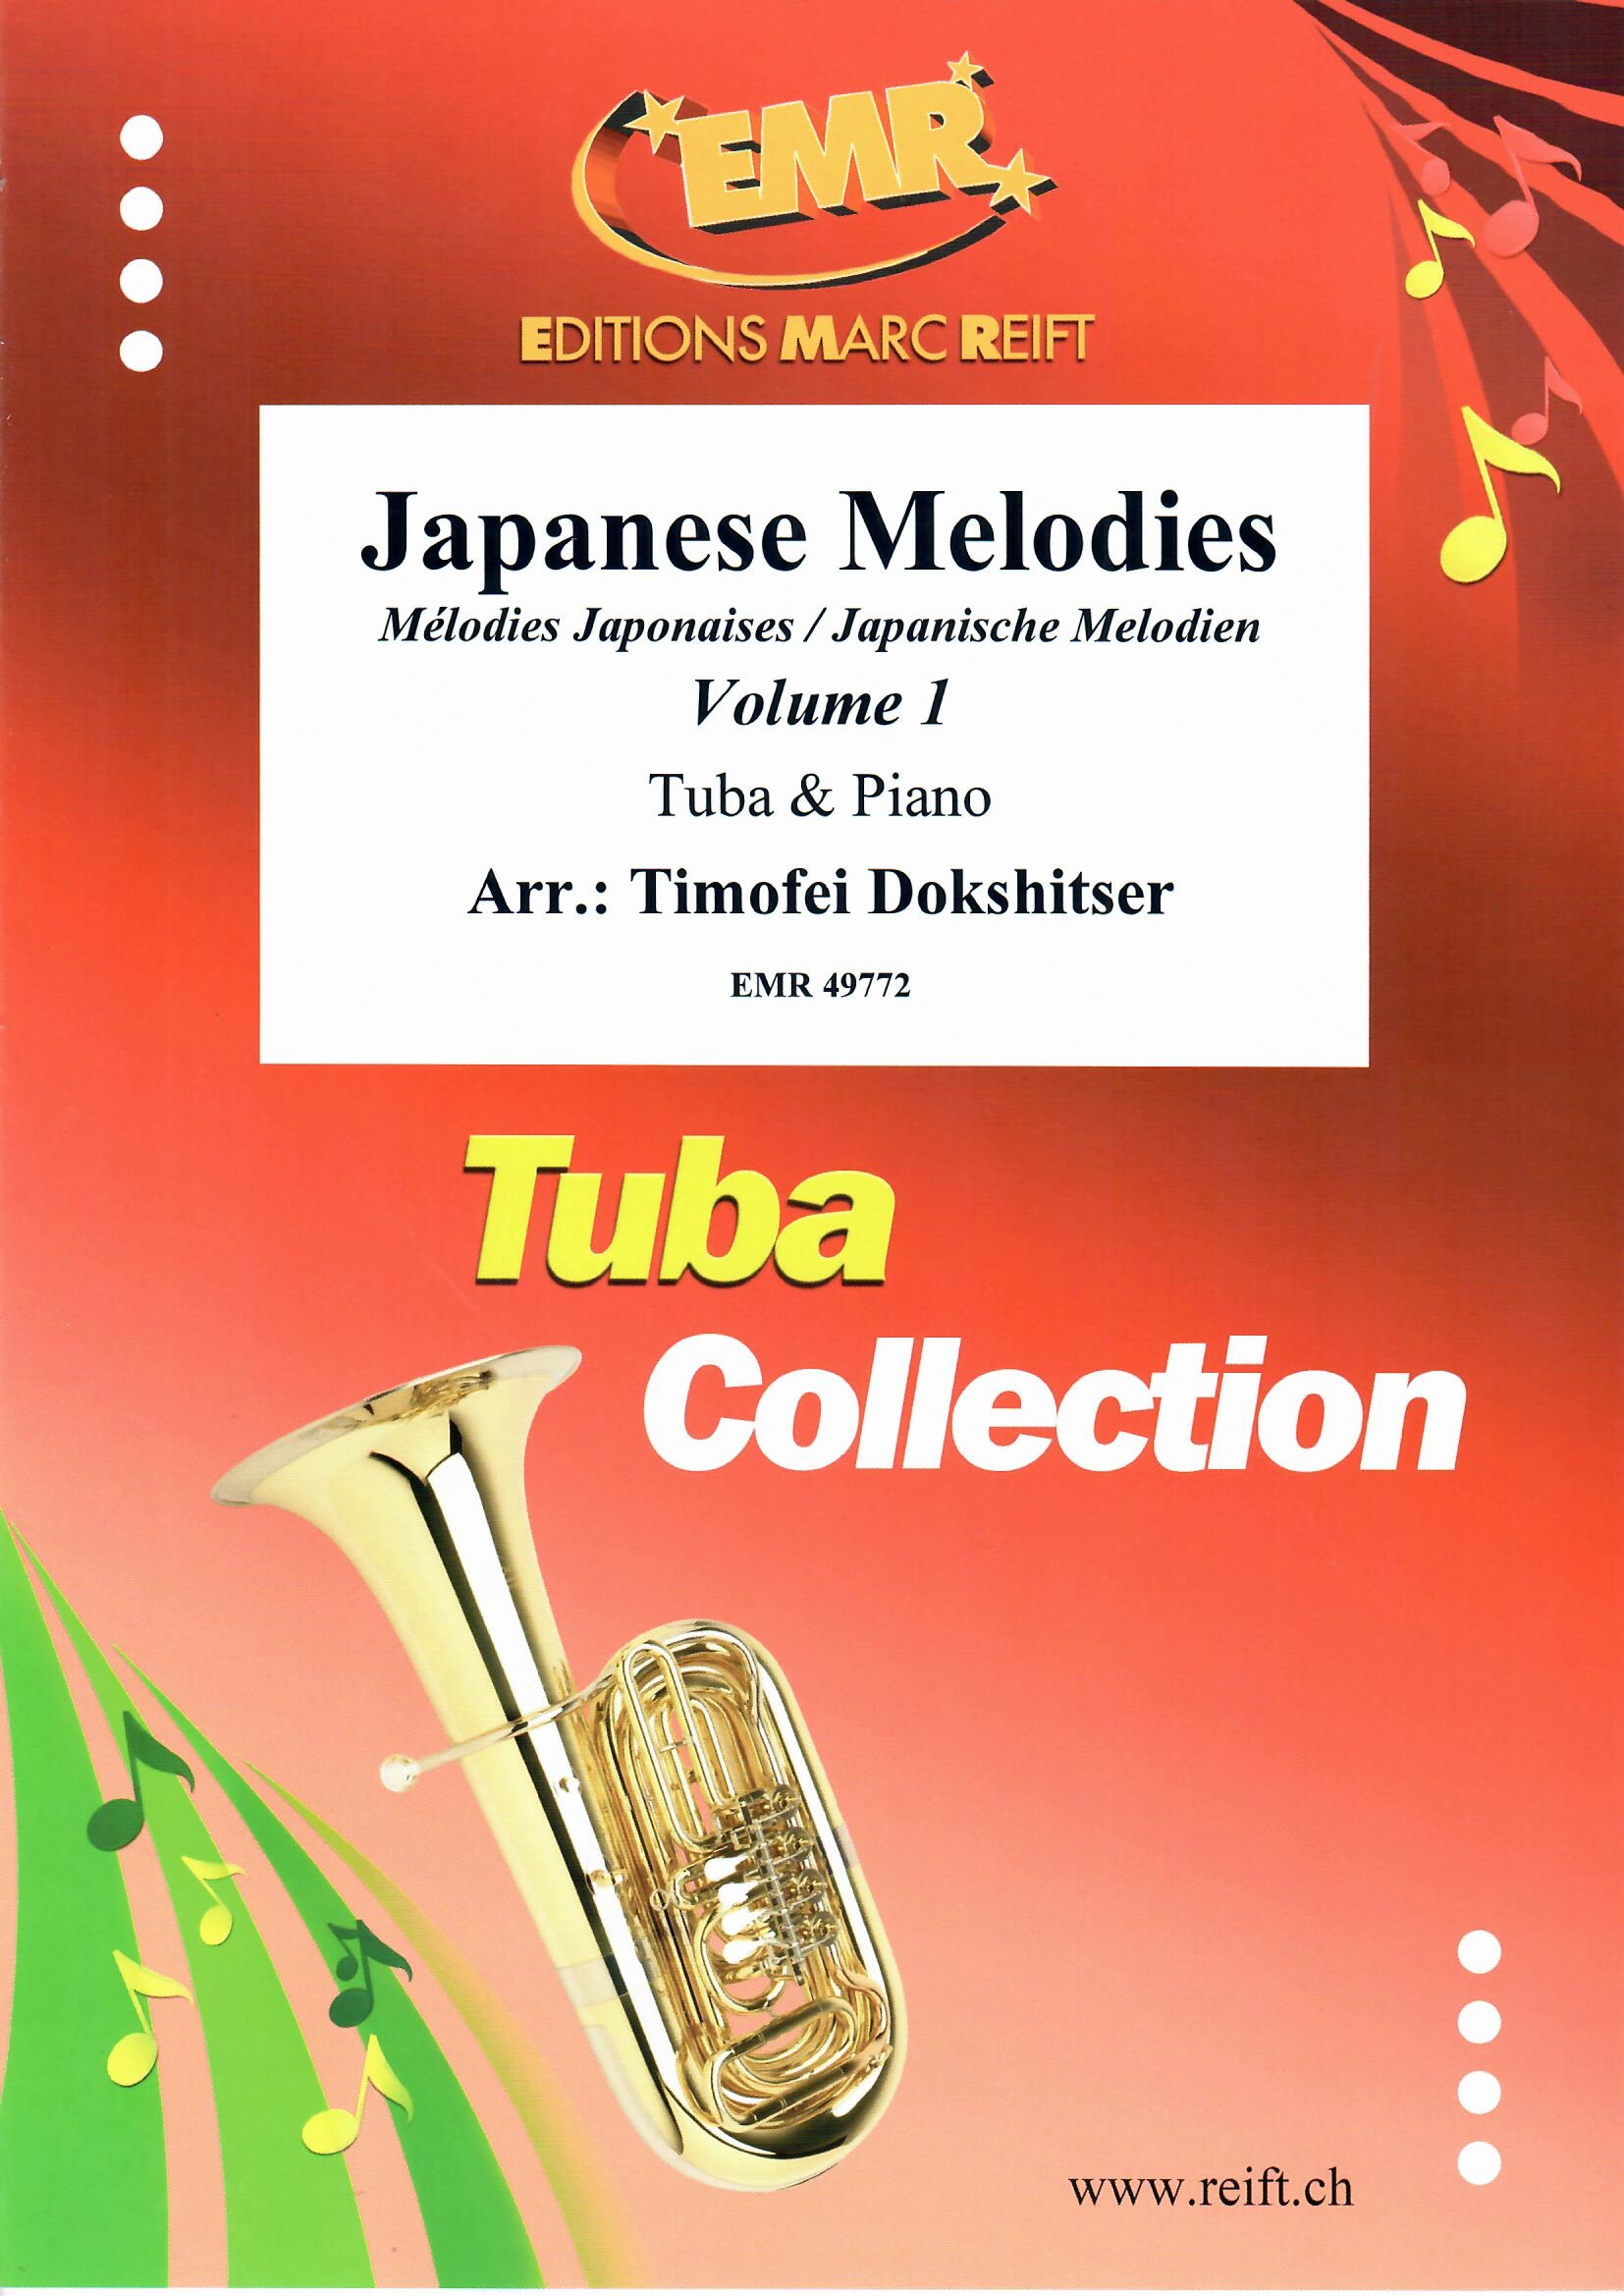 JAPANESE MELODIES VOL. 1 - Tuba & Piano